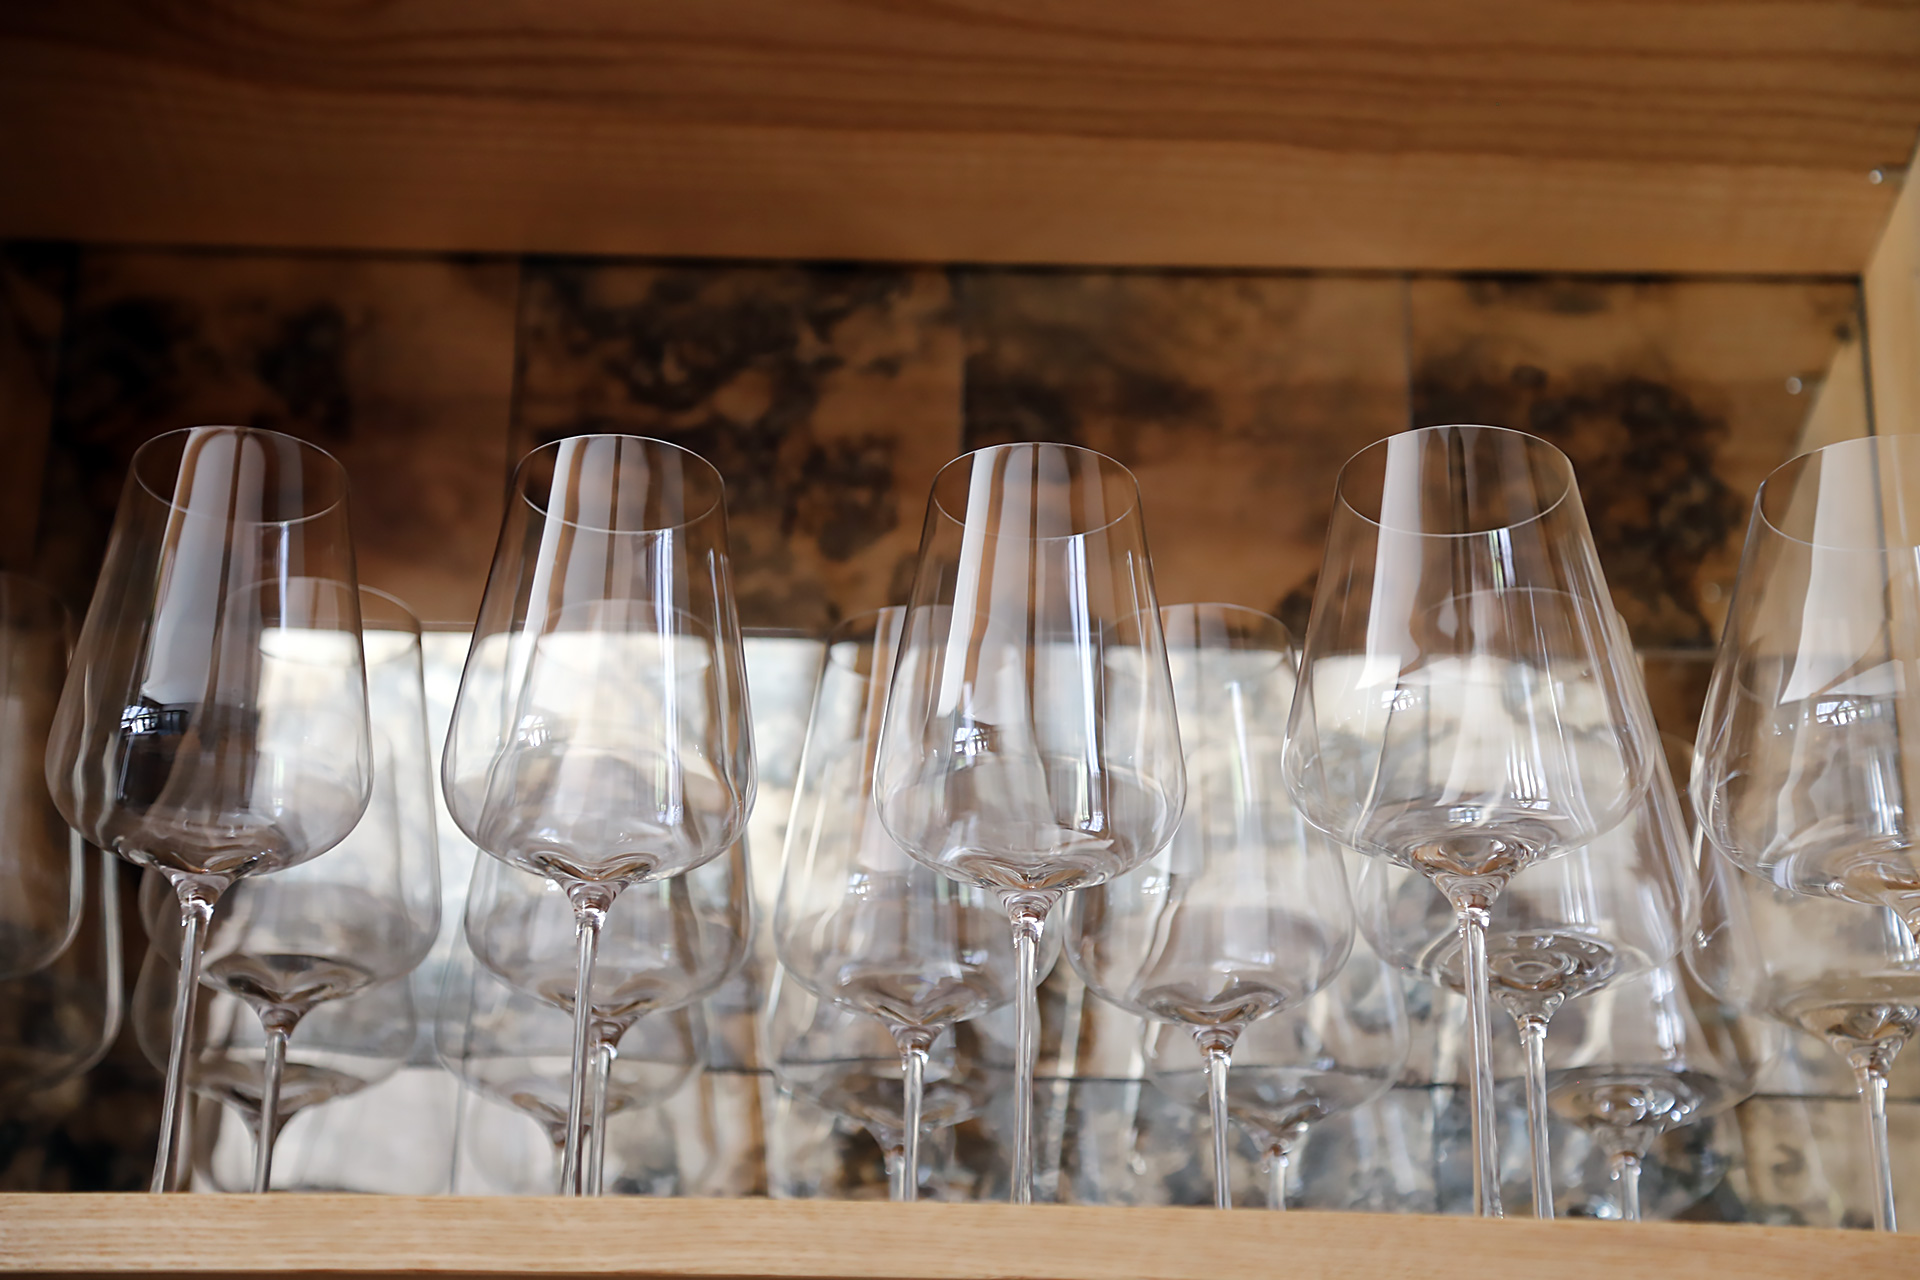 Glassware on display at Birdsong.